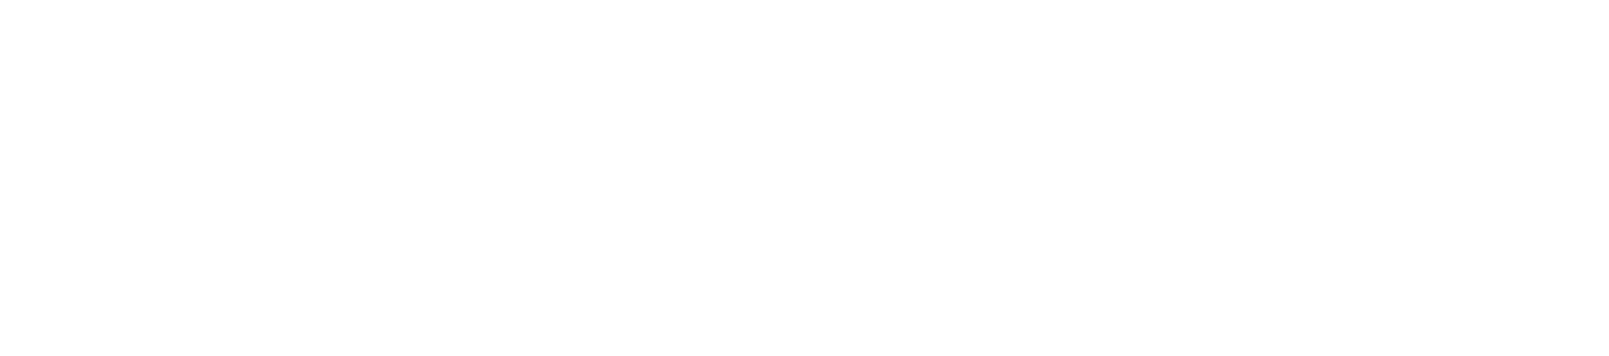 Prometheus Biosciences Logo groß für dunkle Hintergründe (transparentes PNG)